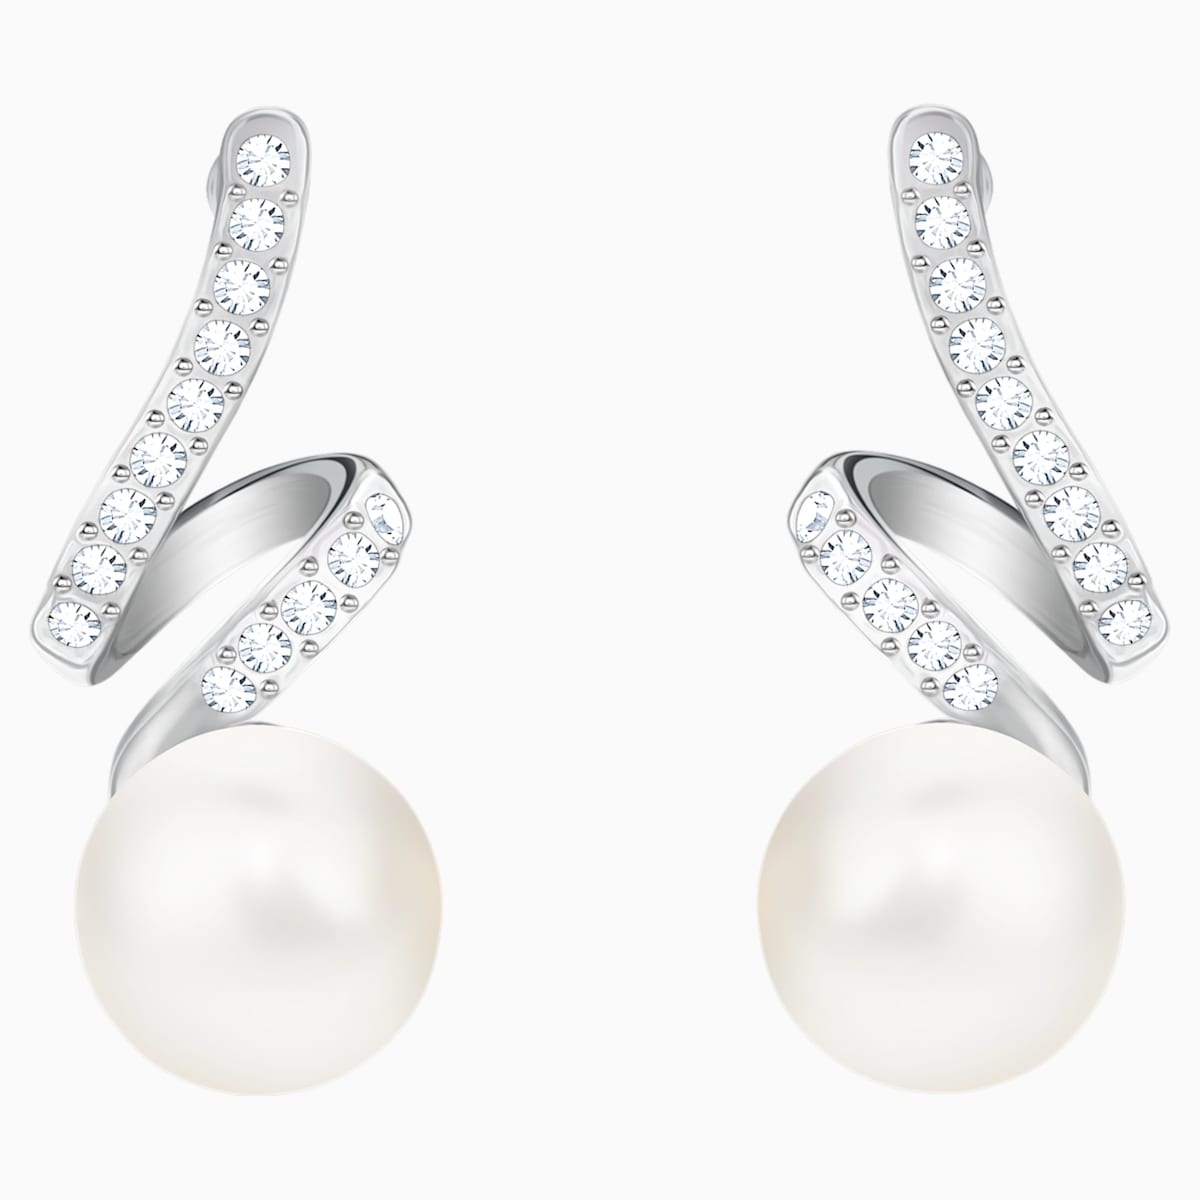 Gabriella Pearl Pierced Earrings, White, Rhodium plated - Swarovski, 5528447